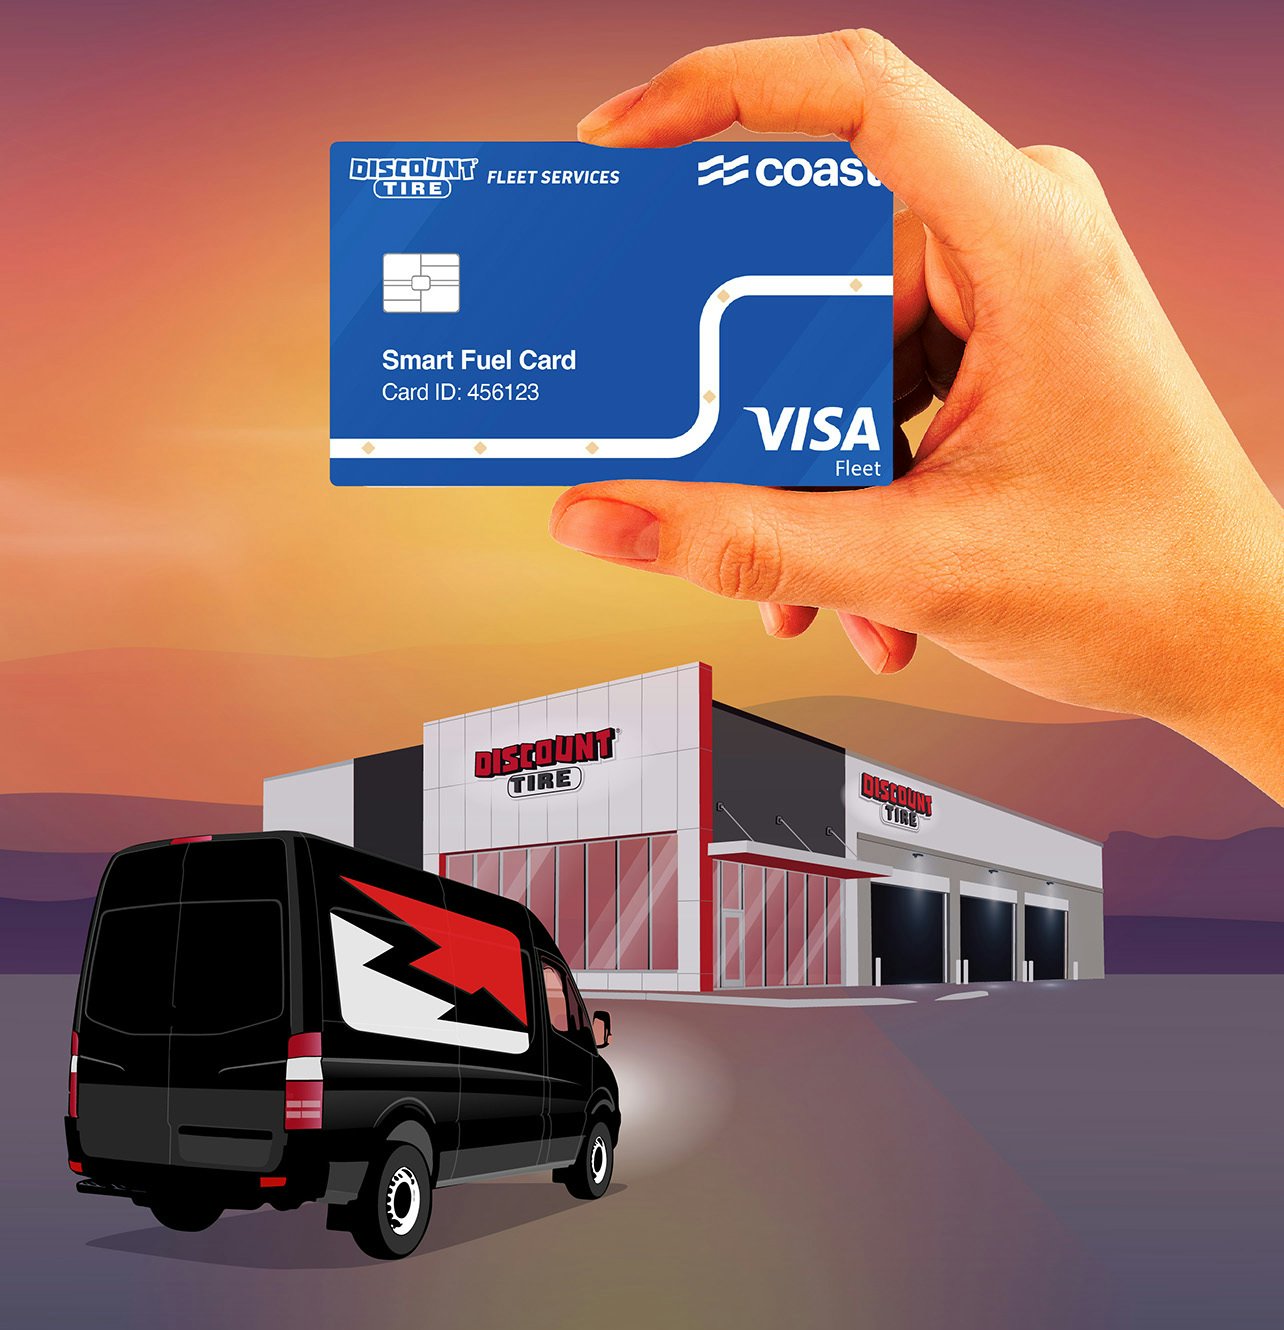 Discount Tire Fleet Services Coast Fuel Card